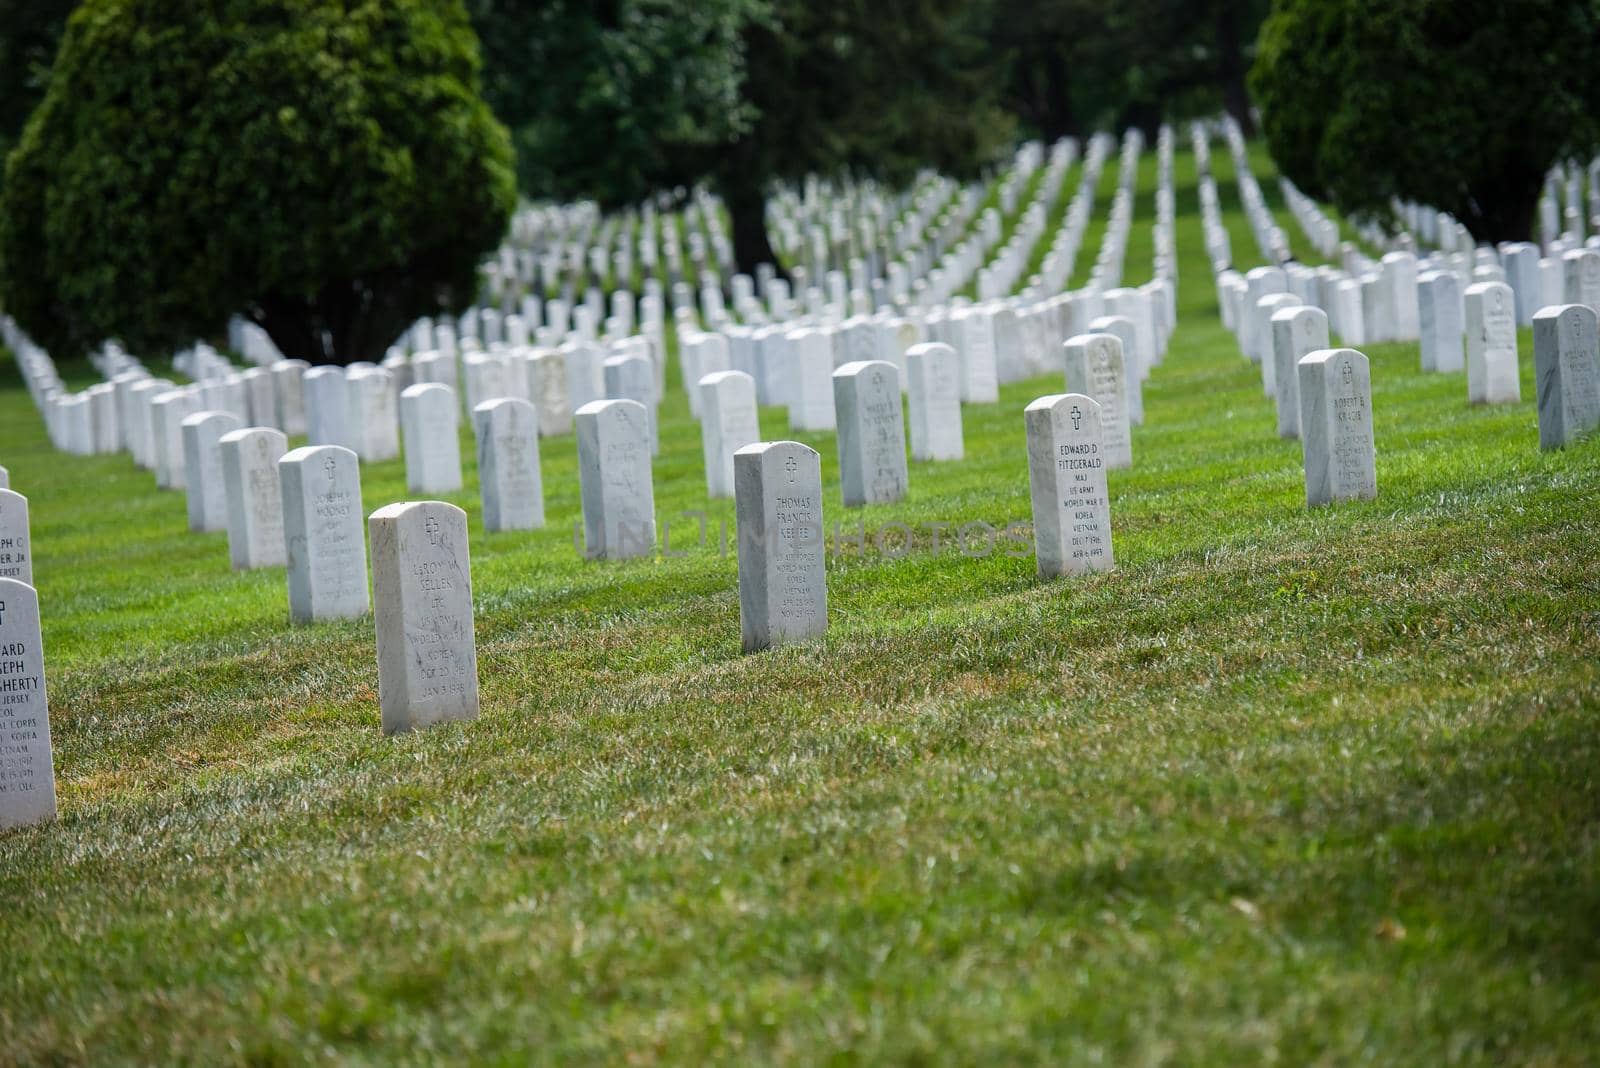 Gravestones at Arlington National Cemetery in Virginia by jyurinko